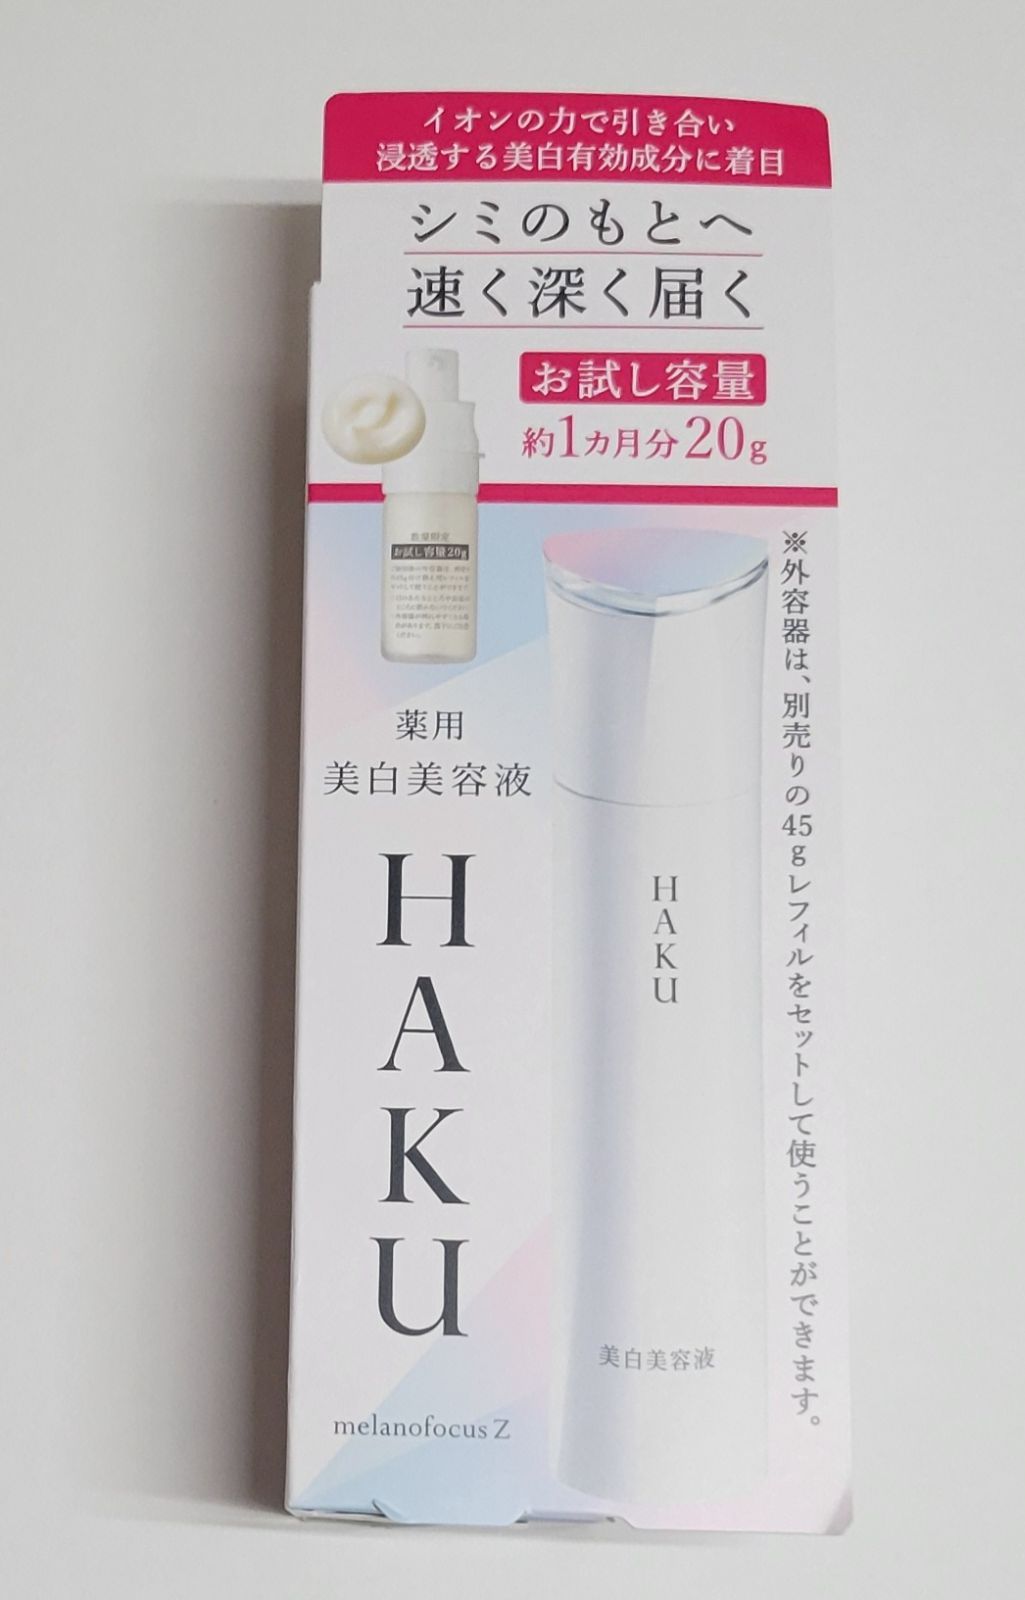 SALE【2本セット】HAKU美白美容液20g